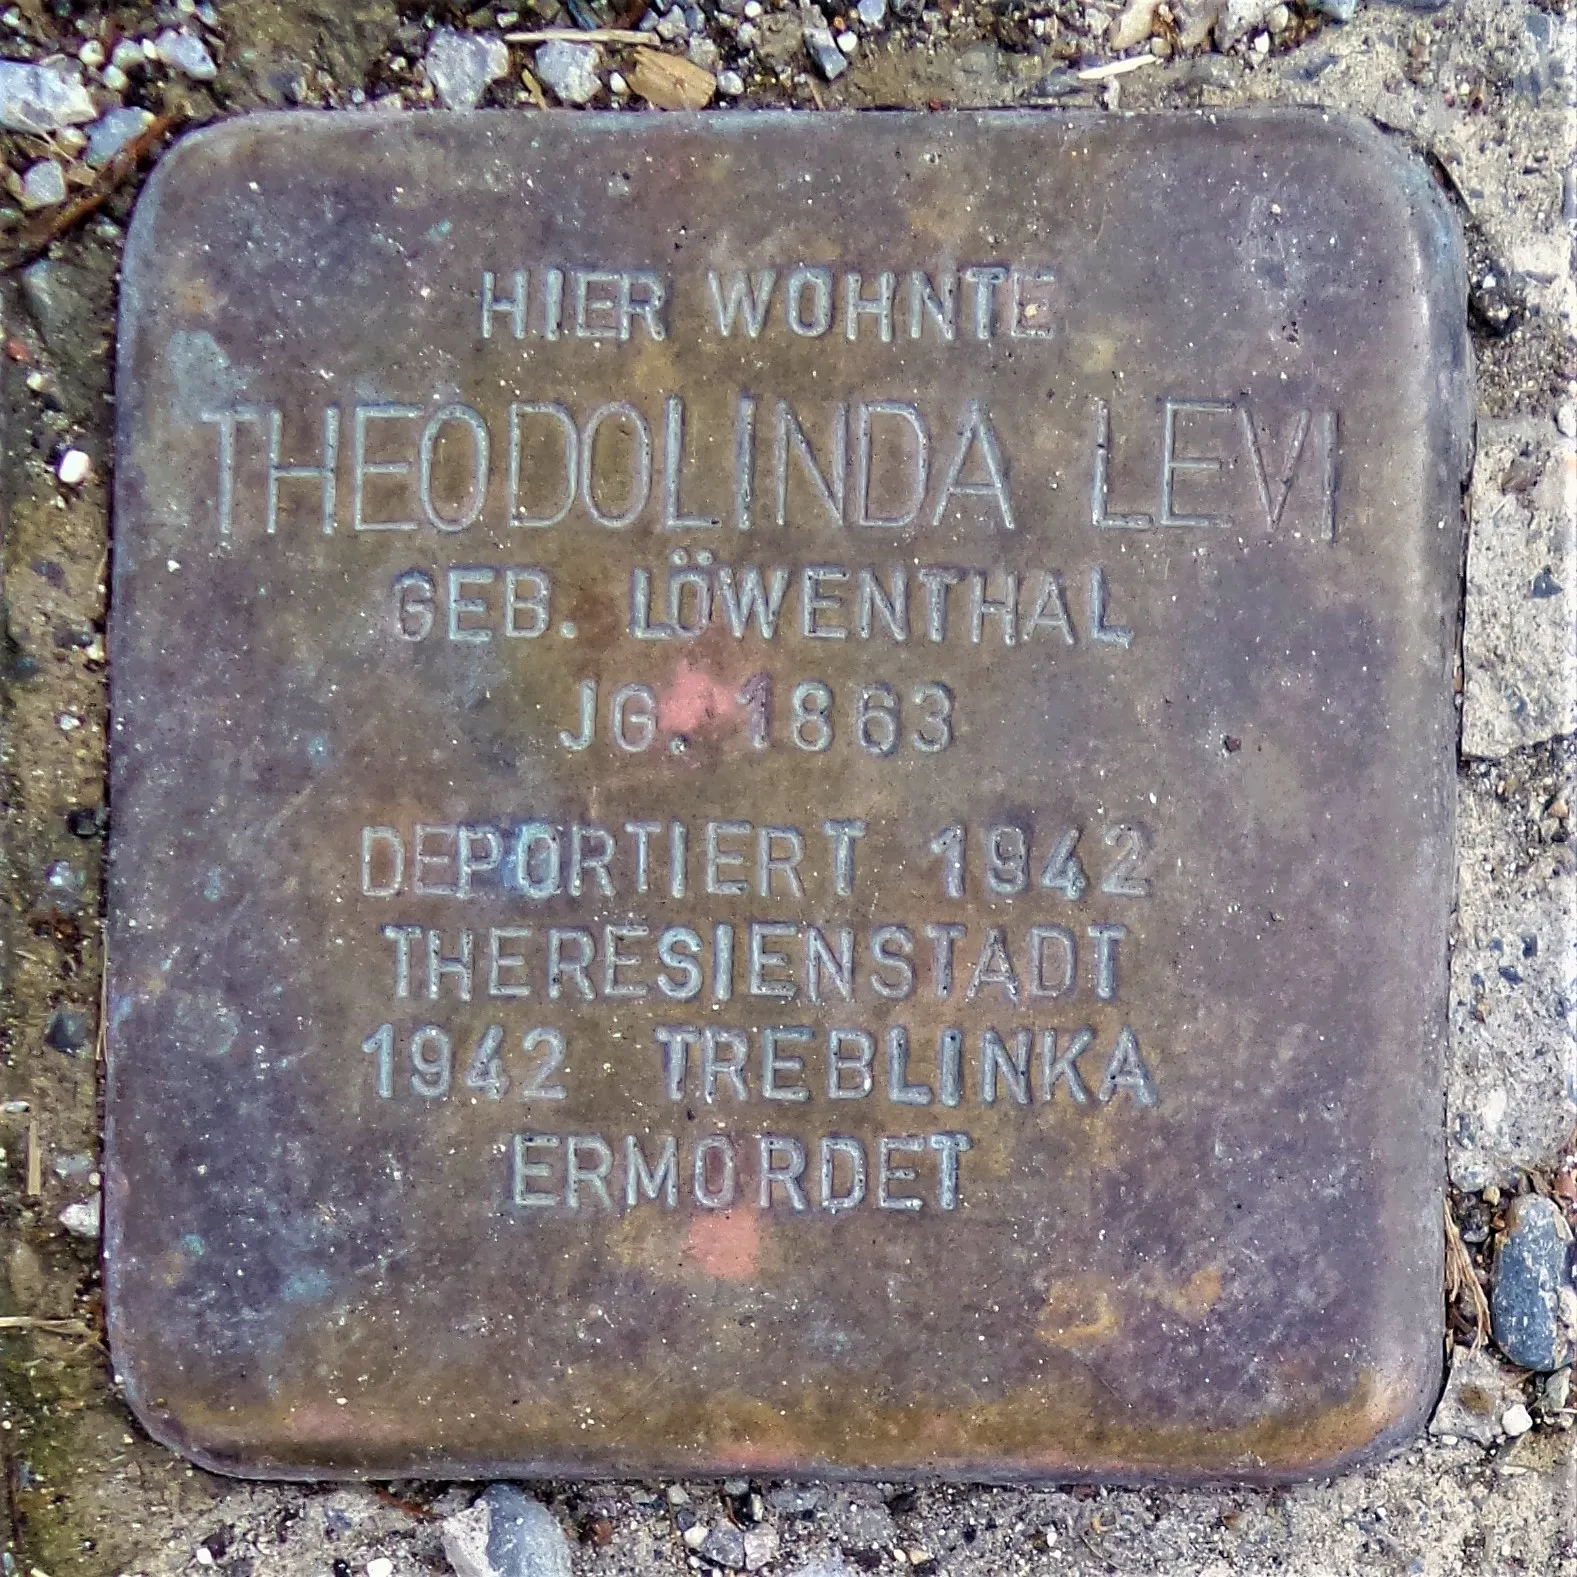 Photo showing: Hier wohnte Theolinda Levi geb. Löwenthal Jg. 1863 - deportiert 1942 Theresienstadt - 1942 Treblinka ermordet